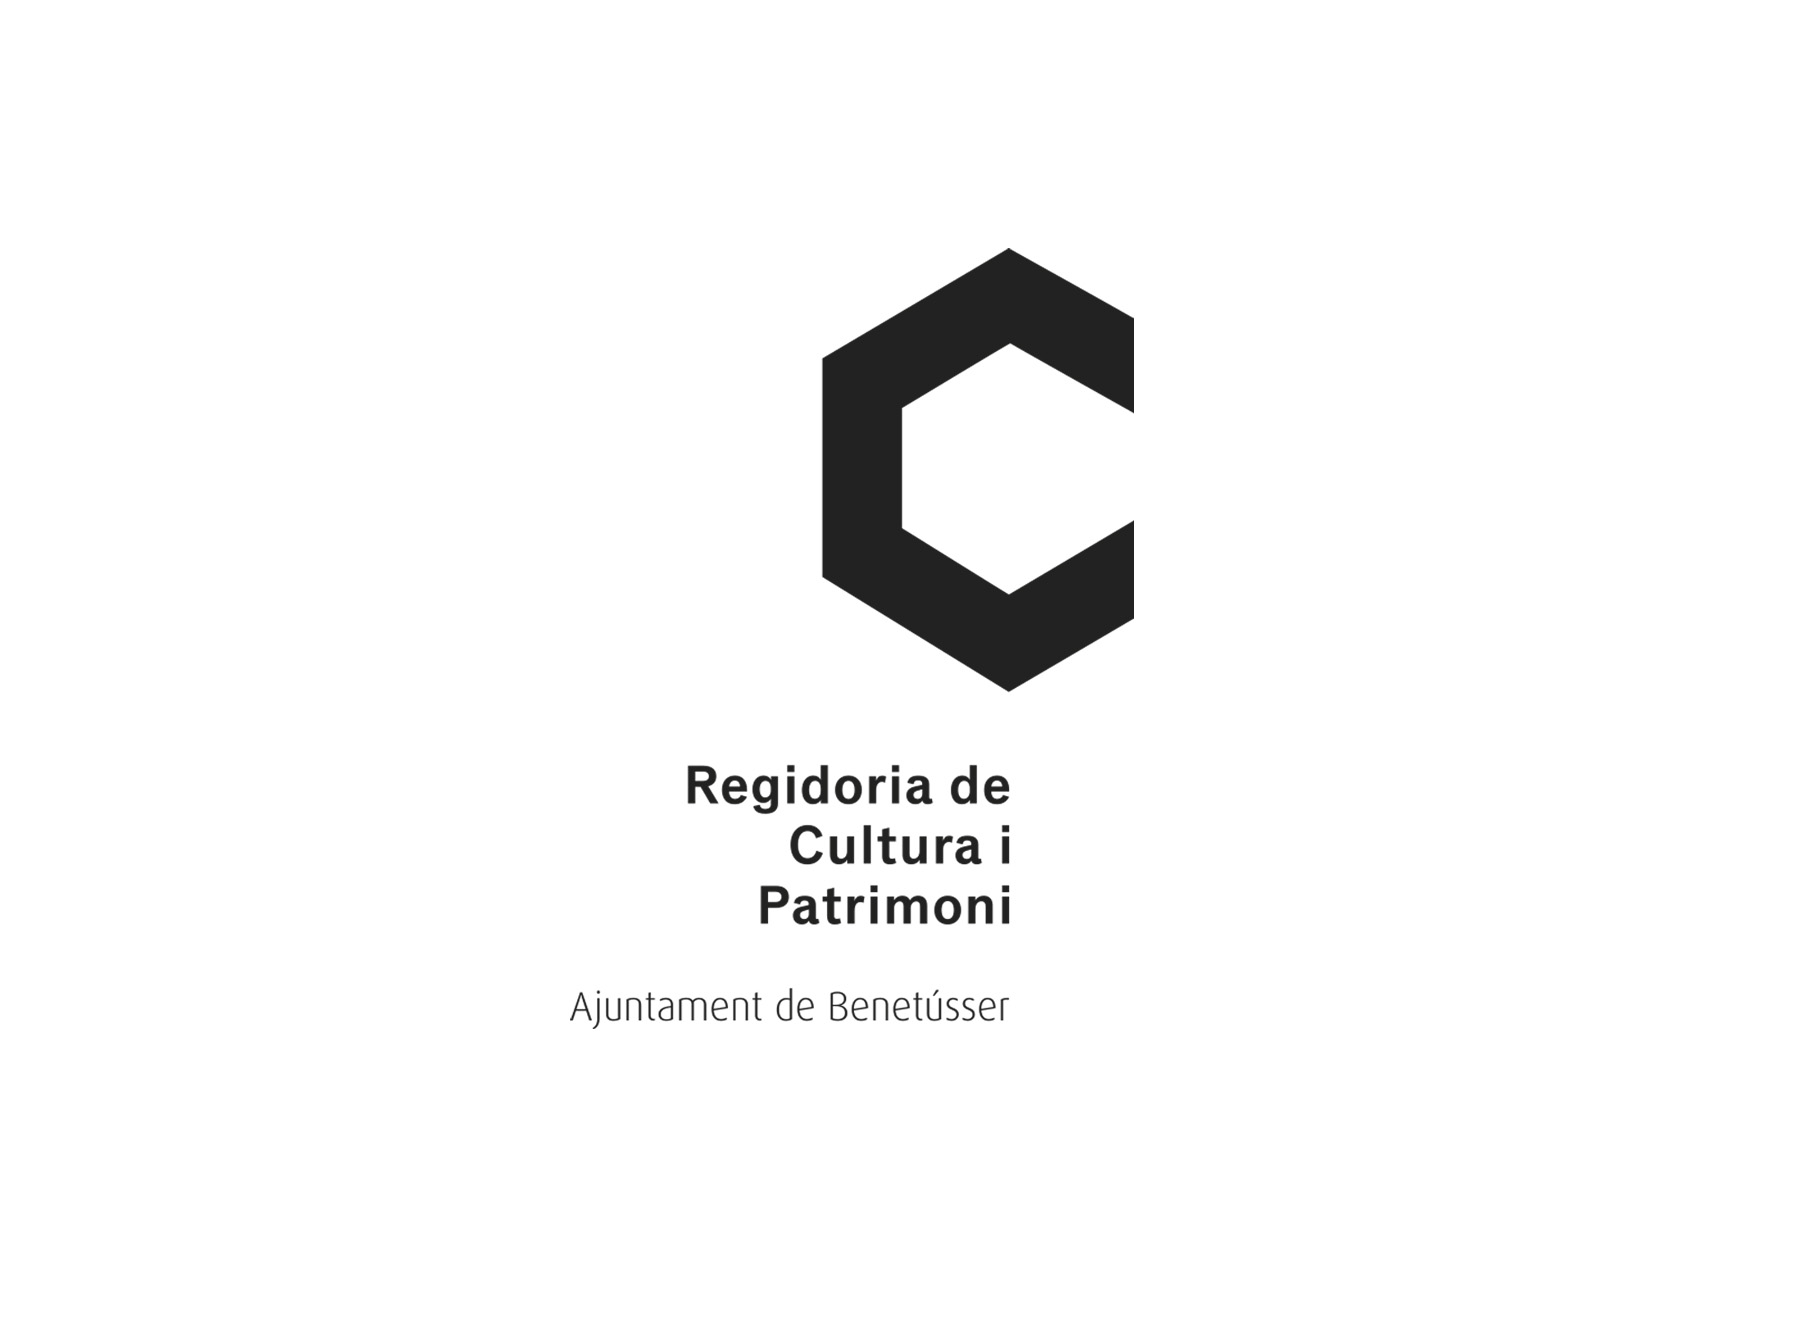 Regidoria de cultura i patrimoni, Ajuntament de Bentùsser. by Creatias Estudio - Creative Work